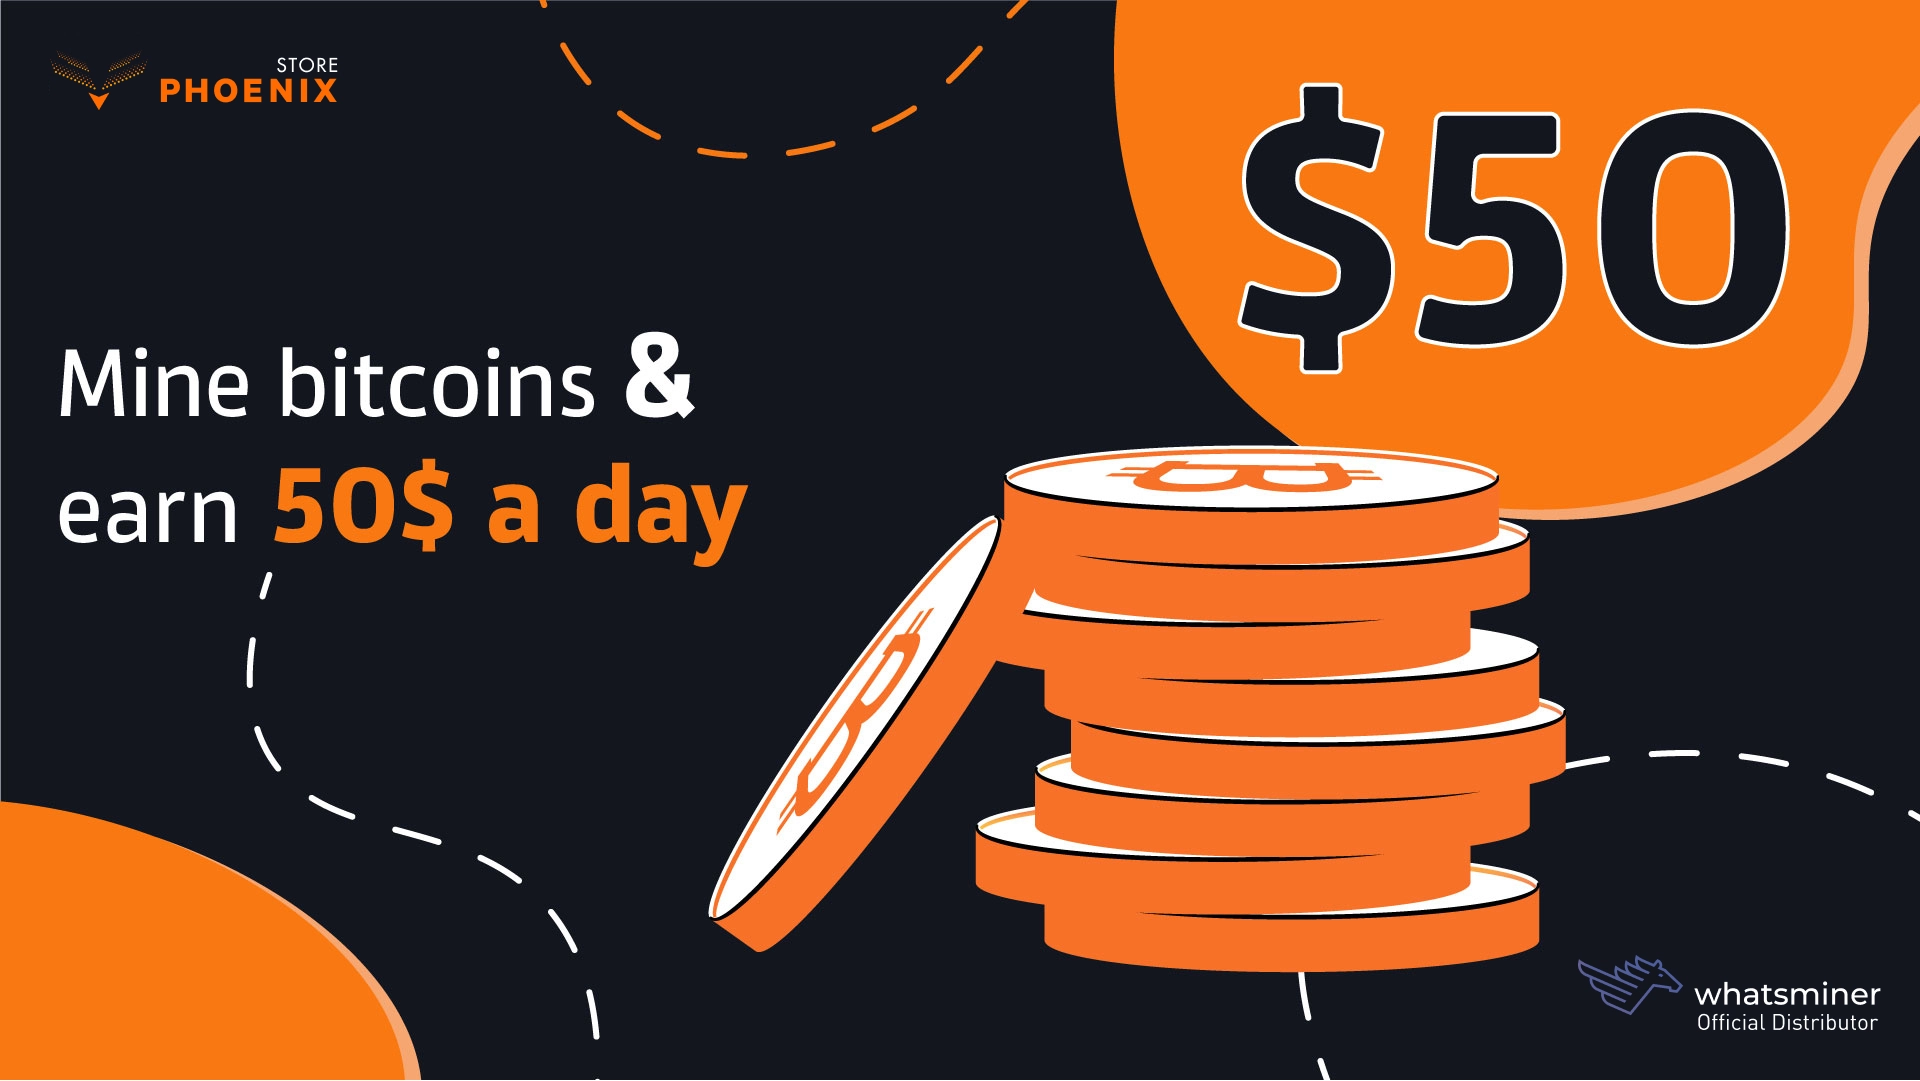 How Do You Mine Bitcoins and Earn $50 a Day?